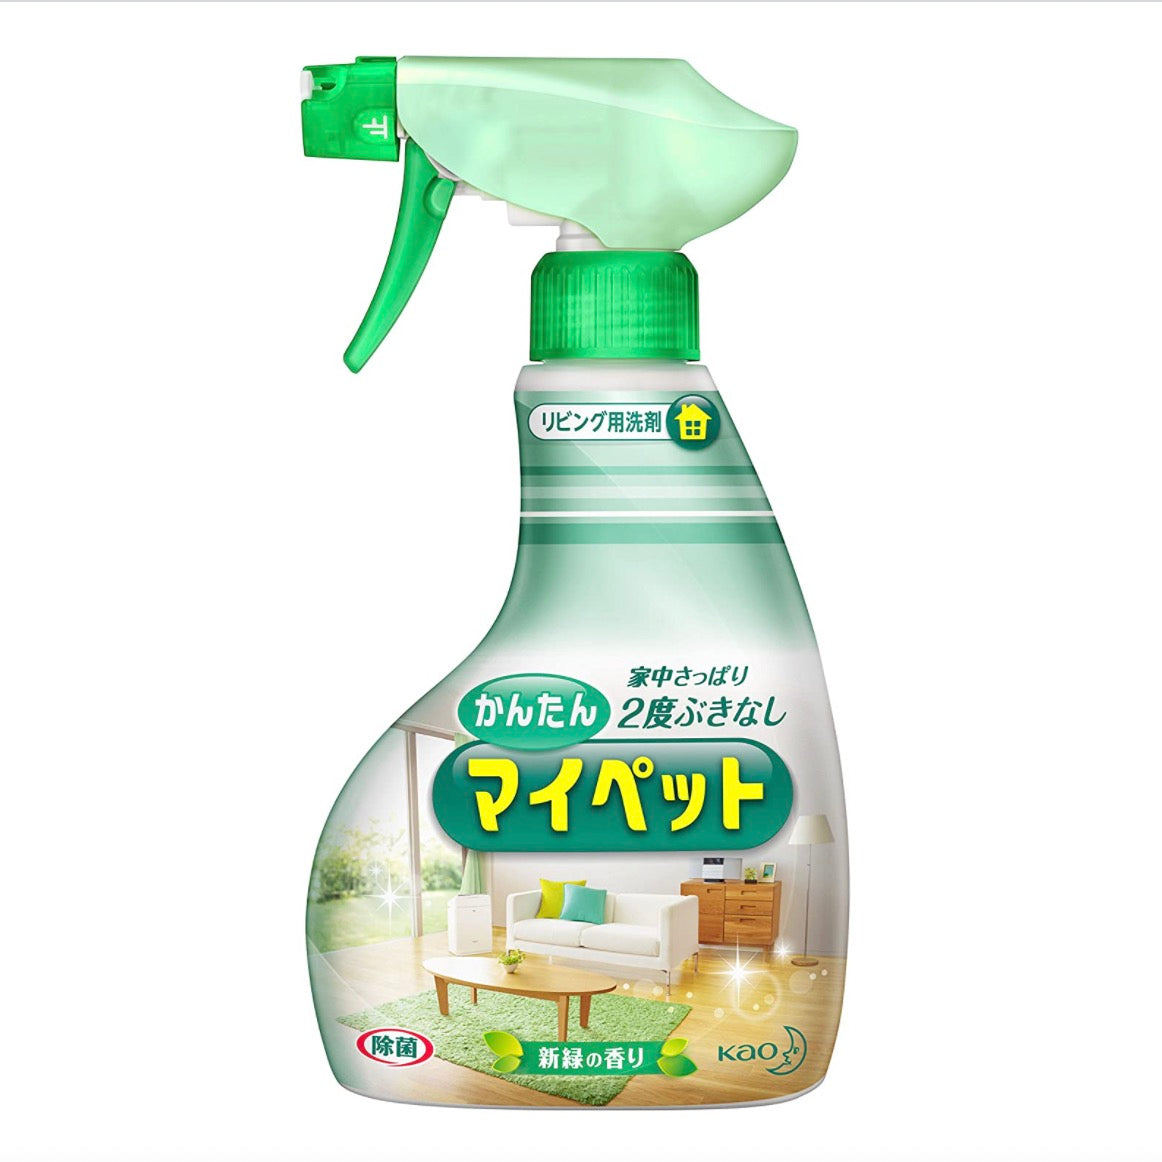 [6-PACK] Kao Japan Household Multi-purpose Cleaner 400ml Furniture floor sterilization and deodorization